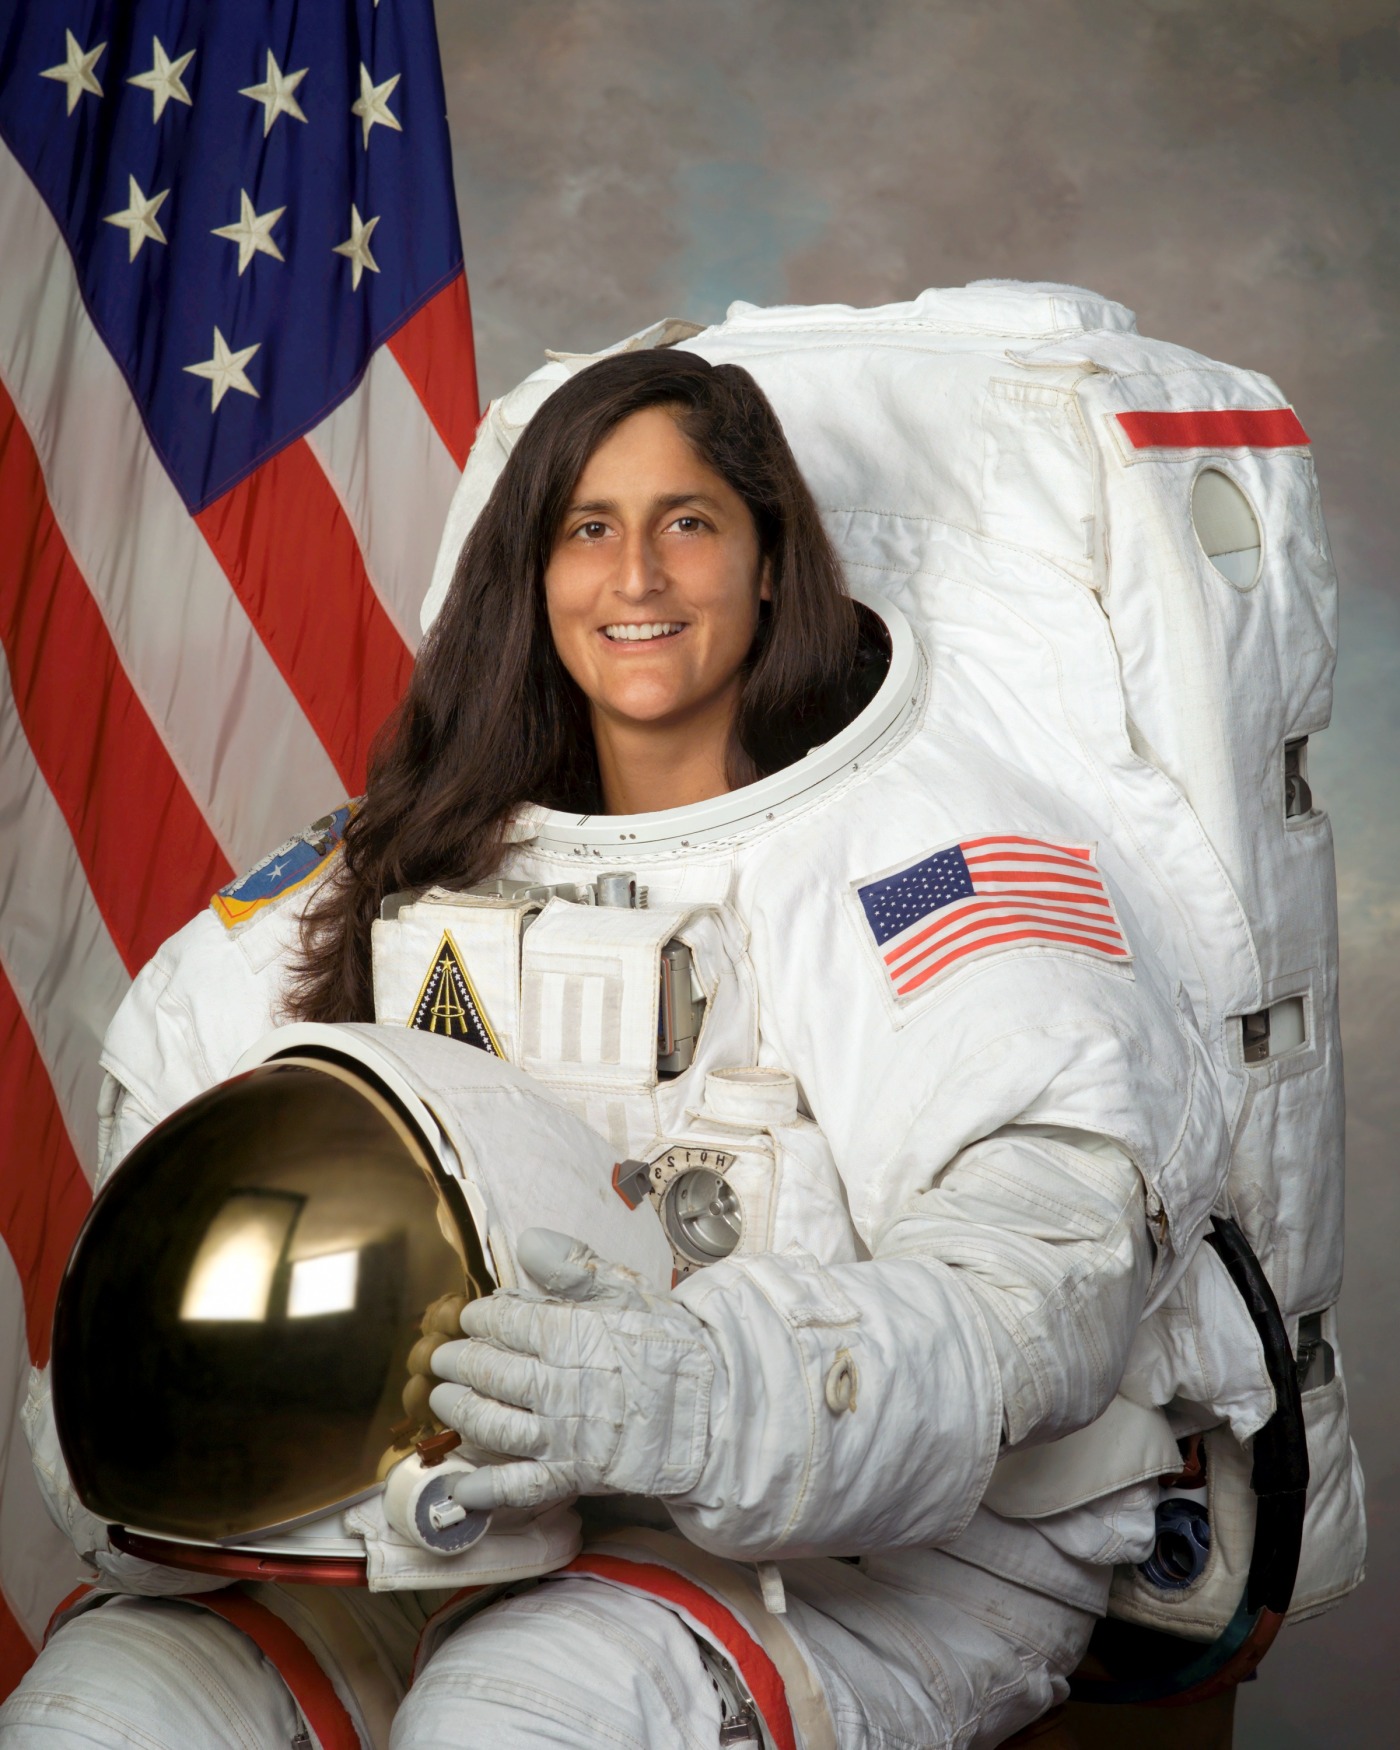 native american astronaut